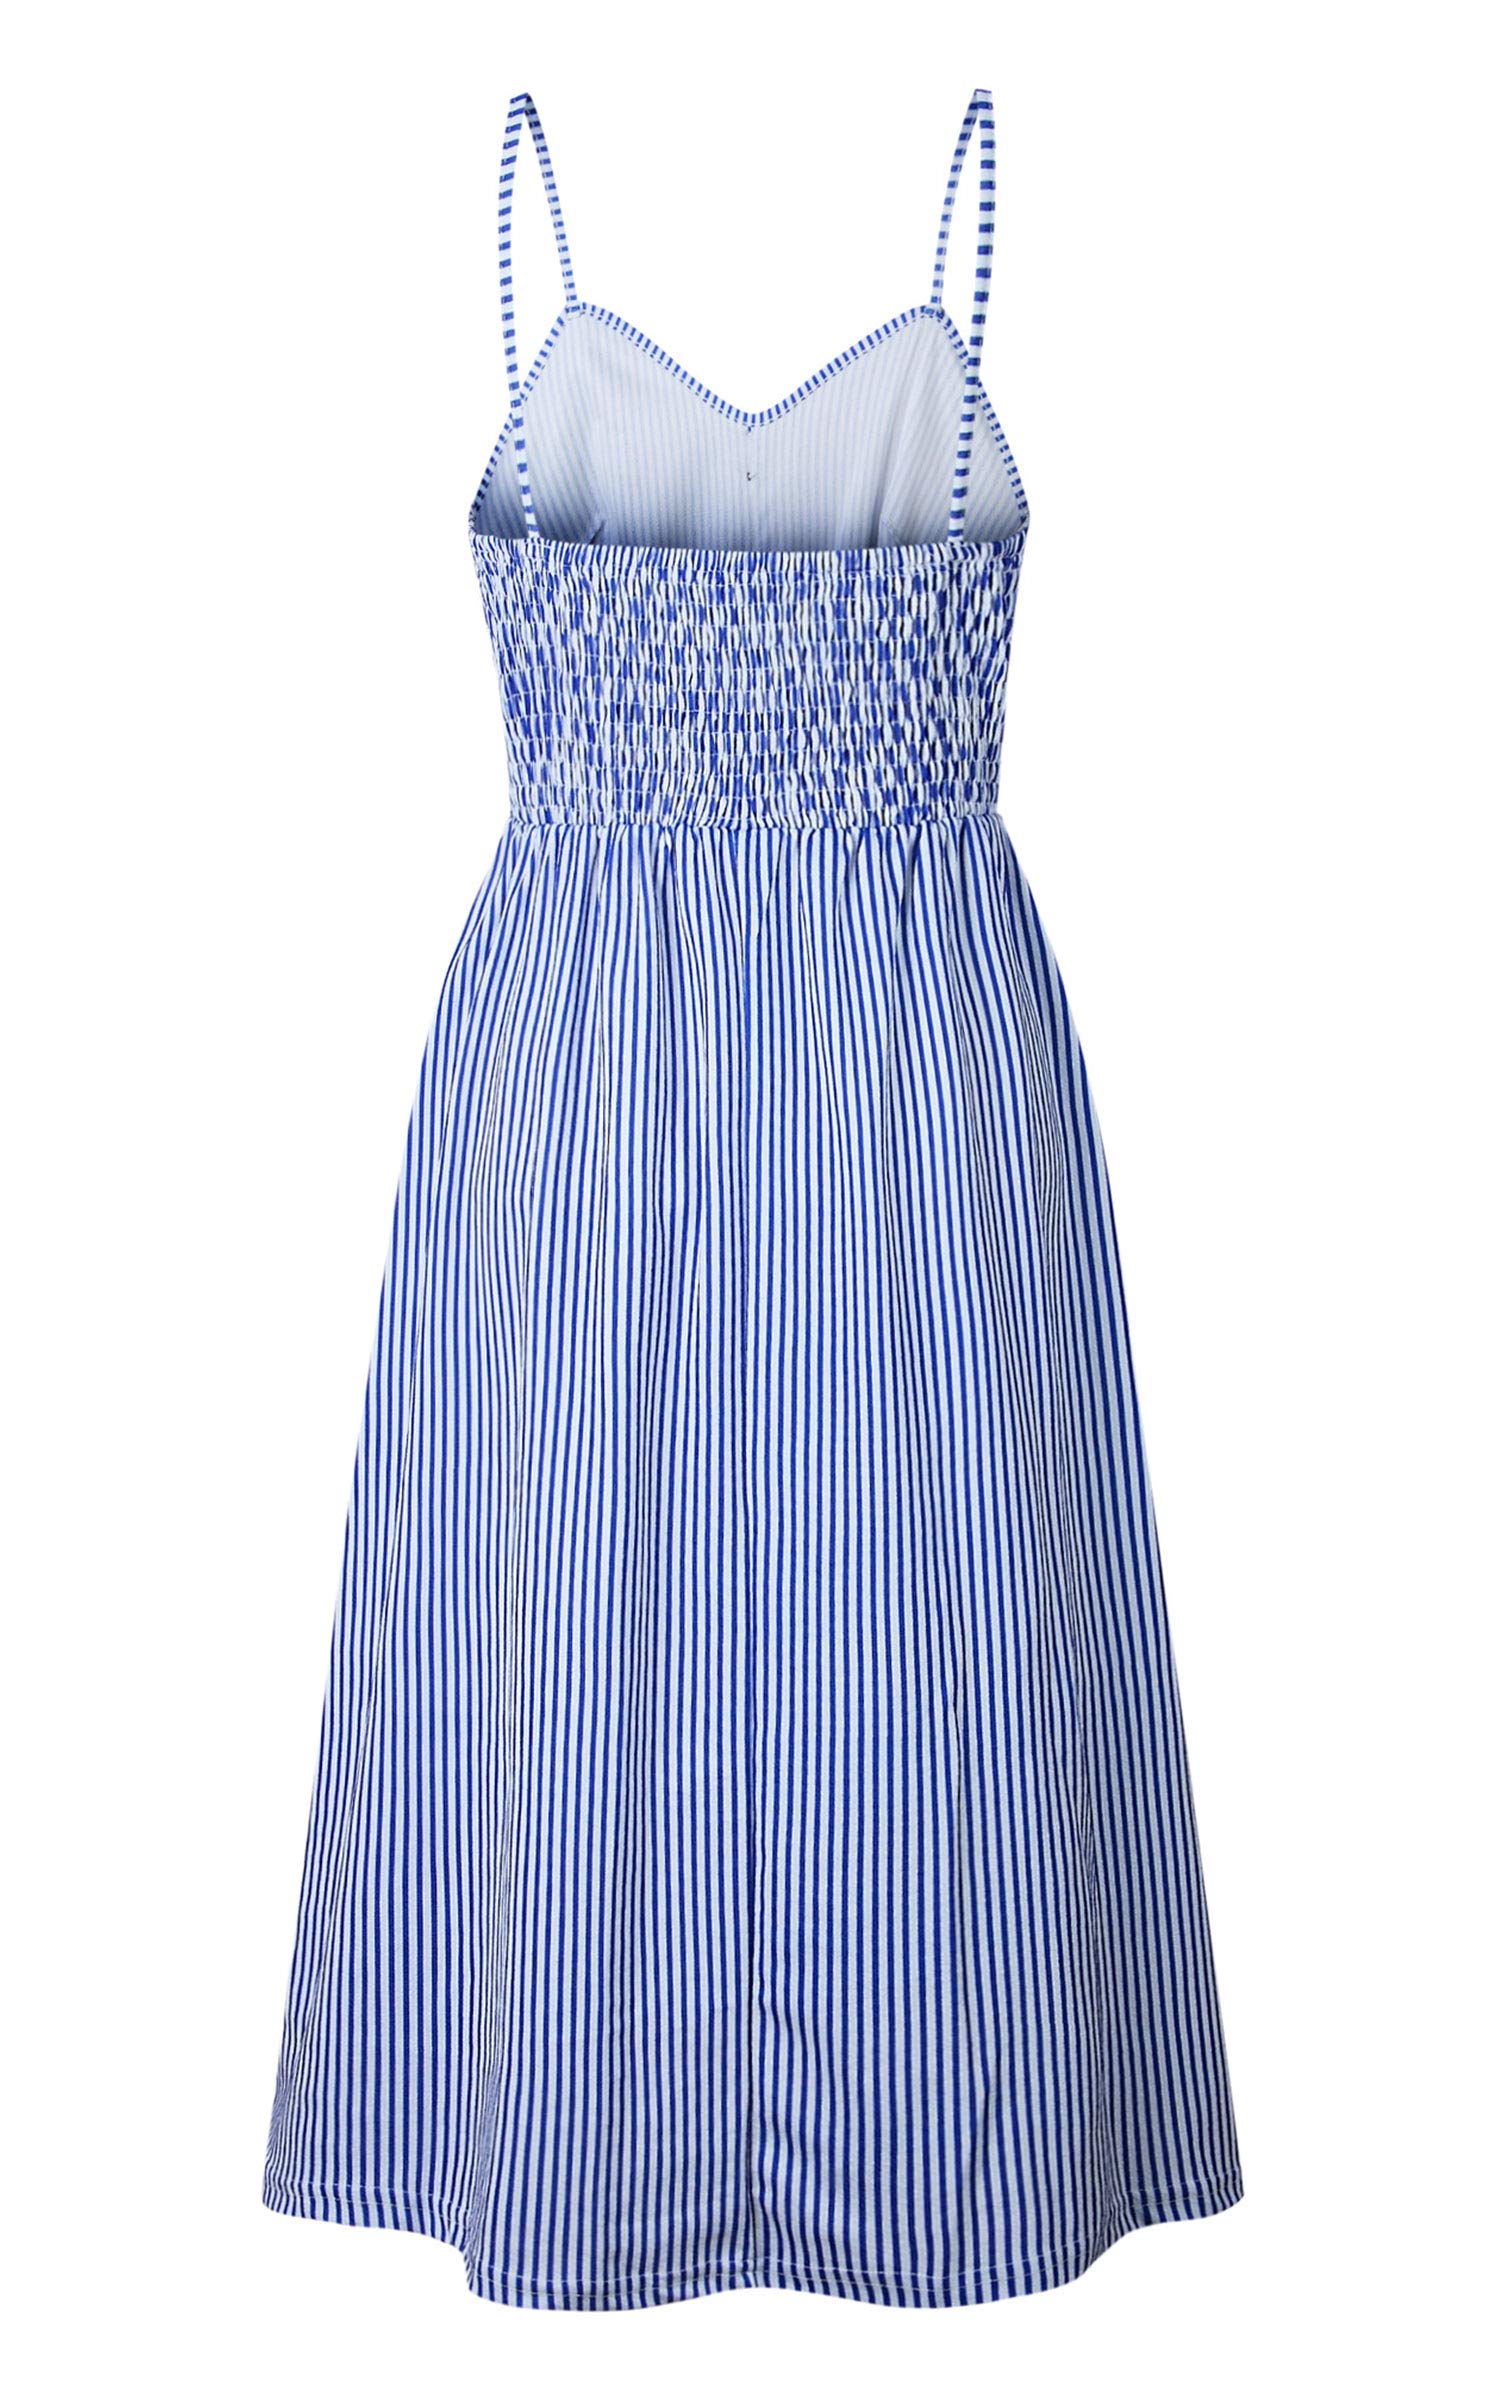 Angashion Women's Dresses-Summer Floral Bohemian Spaghetti Strap Button Down Swing Midi Dress